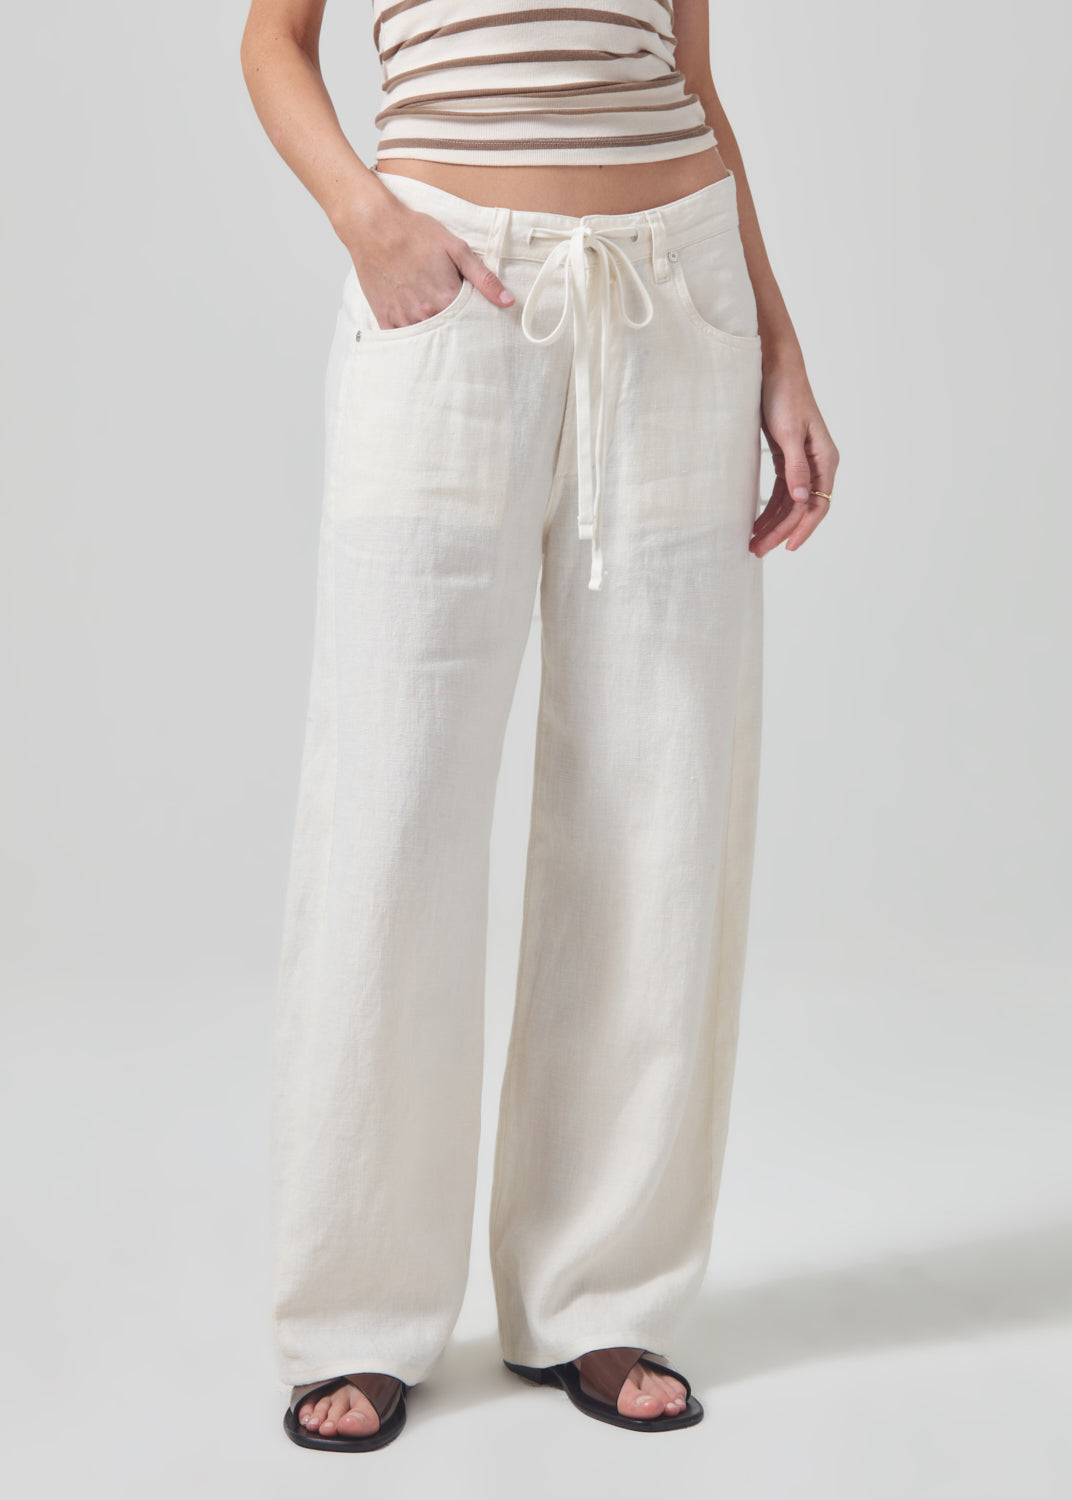 Brynn Drawstring Linen Trouser in Vanilla